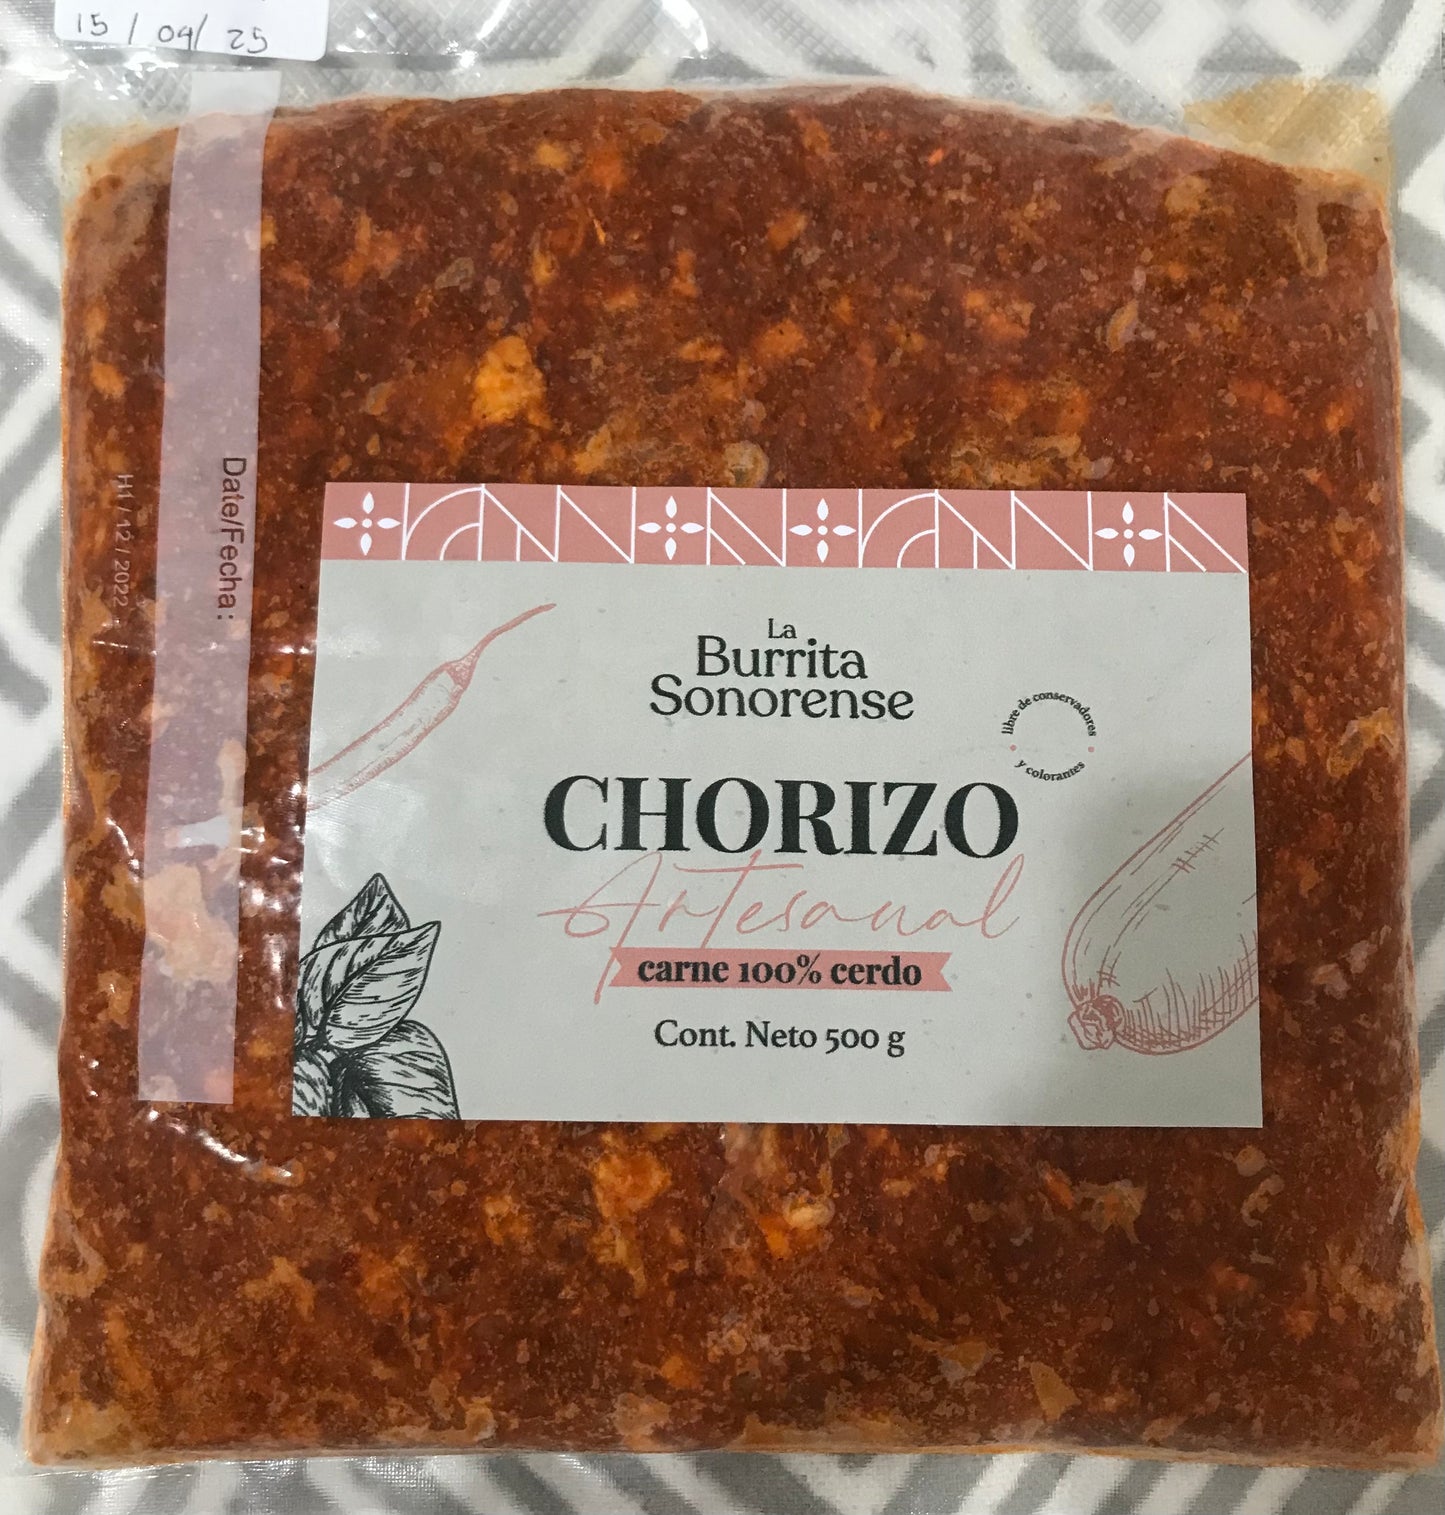 Chorizo Artesanal